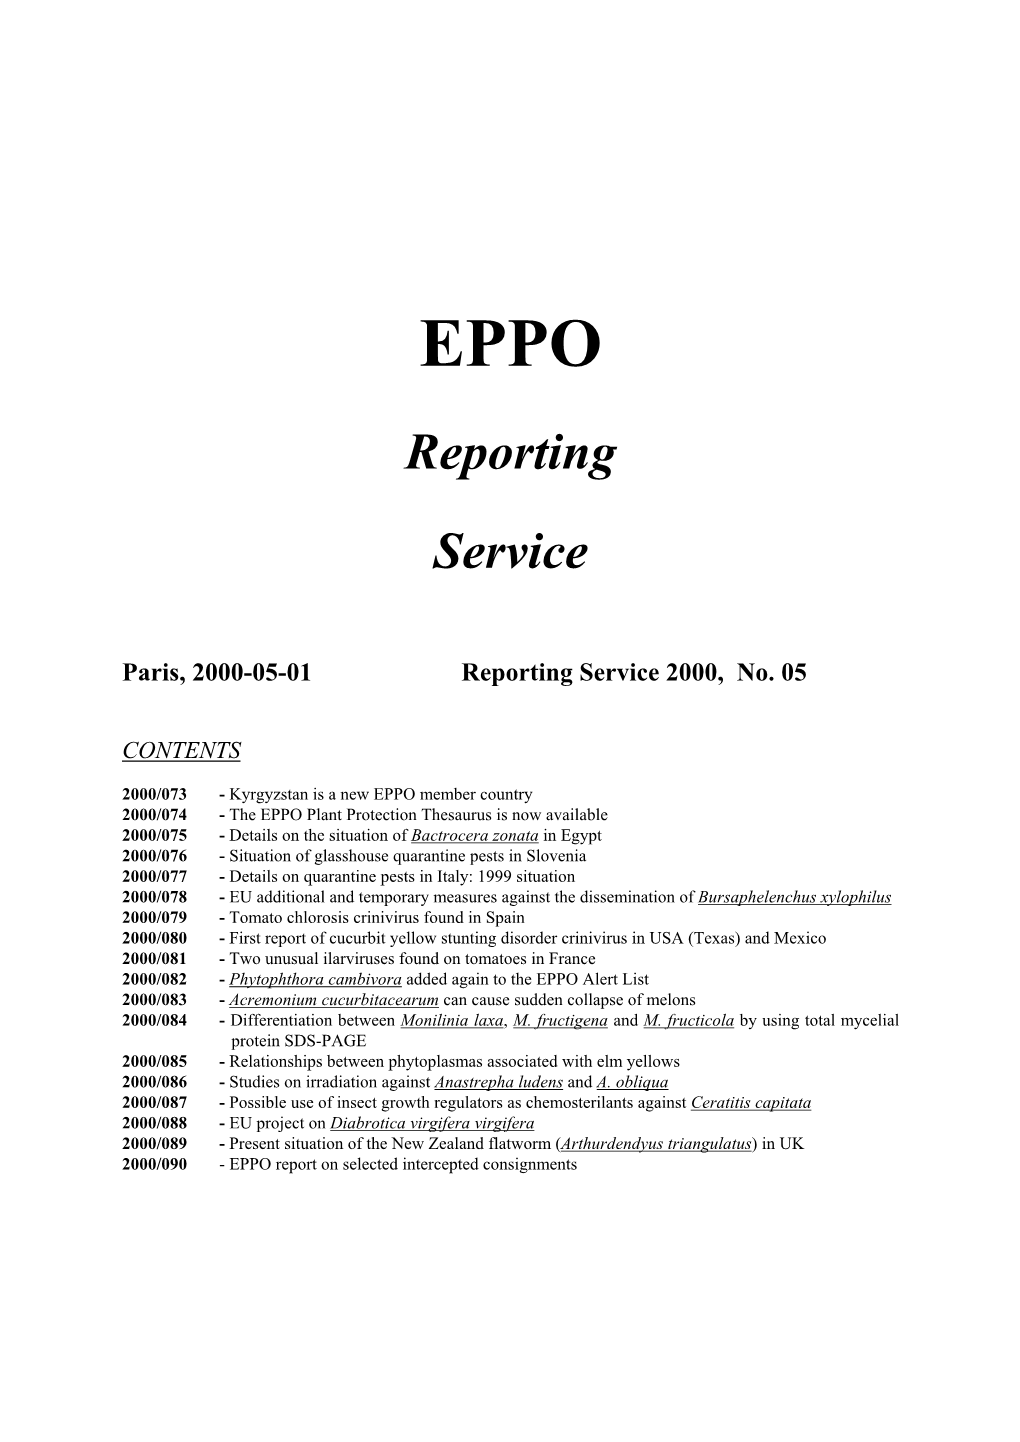 Reporting Service 2000, No